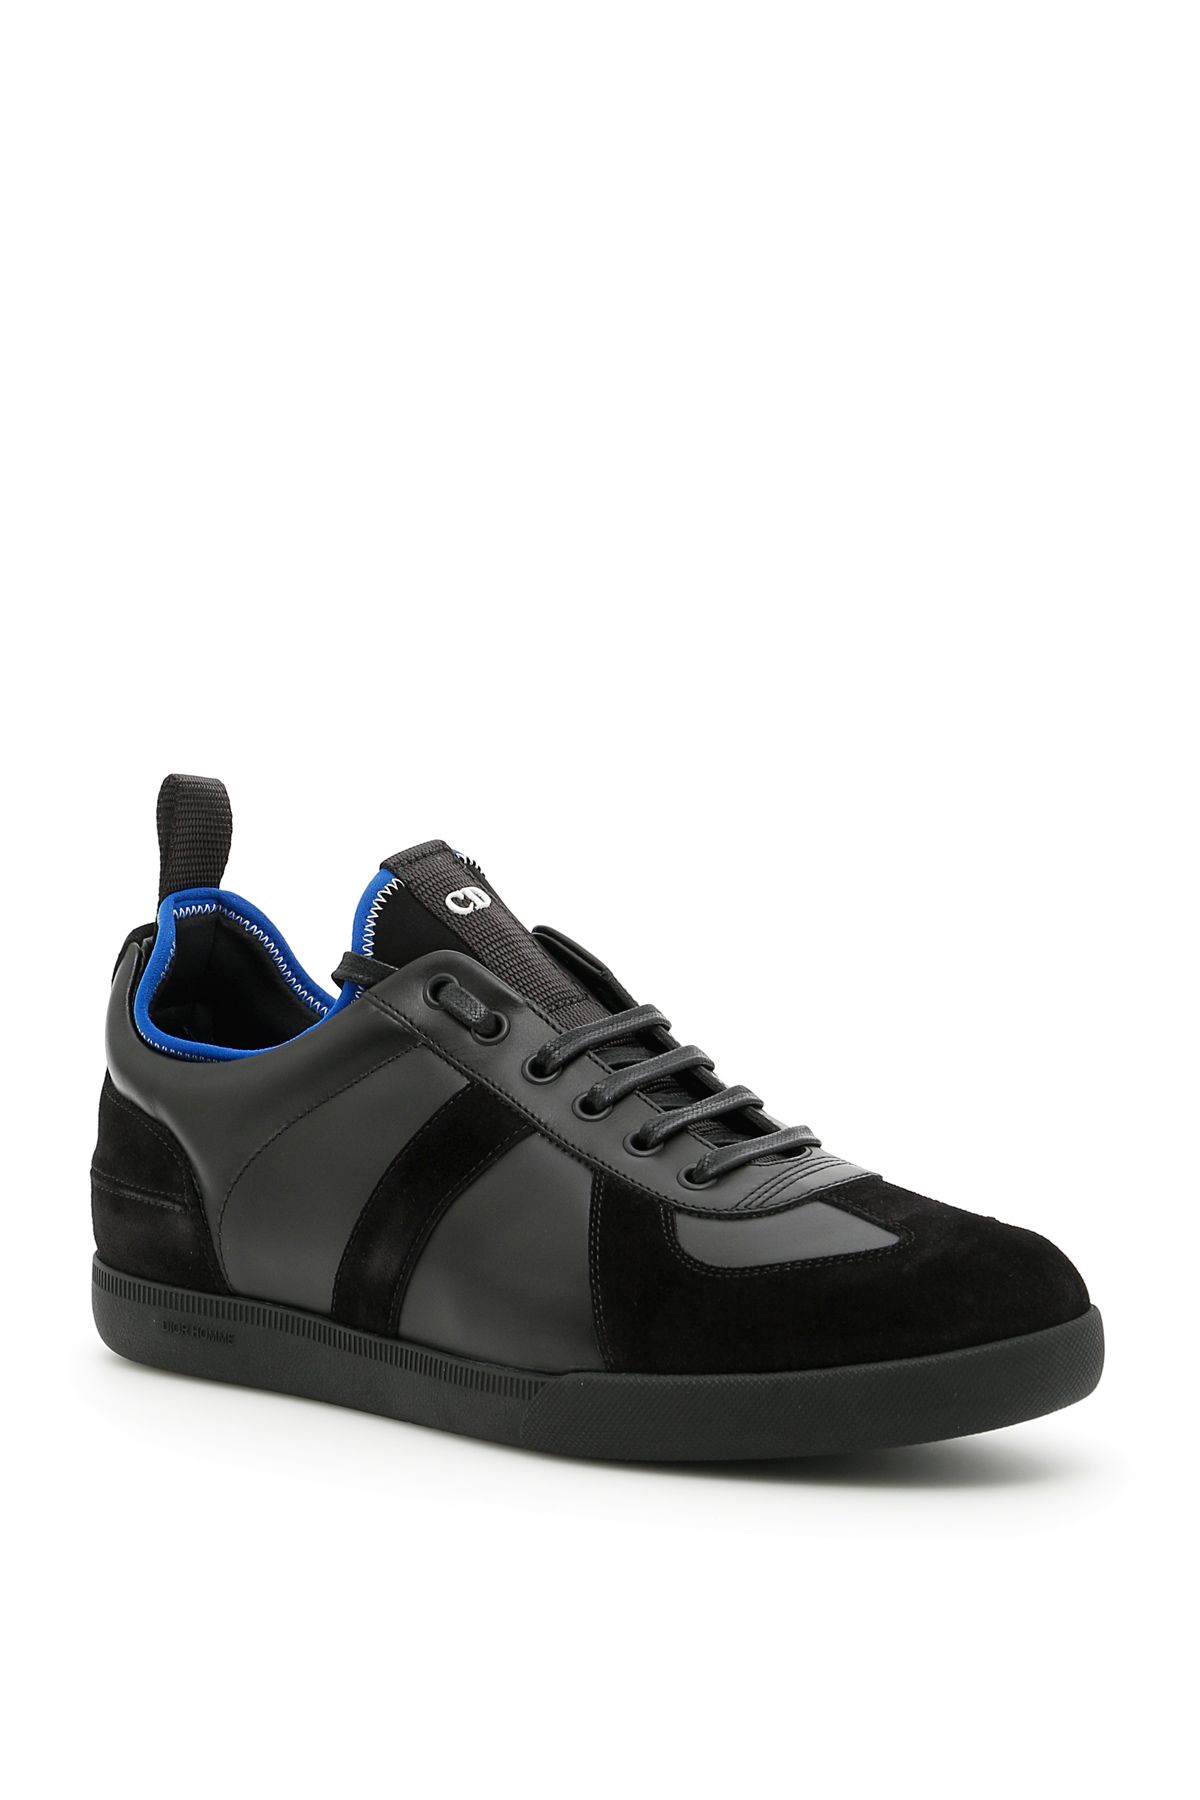 DIOR B01 Sneakers in Black/Blueblu | ModeSens